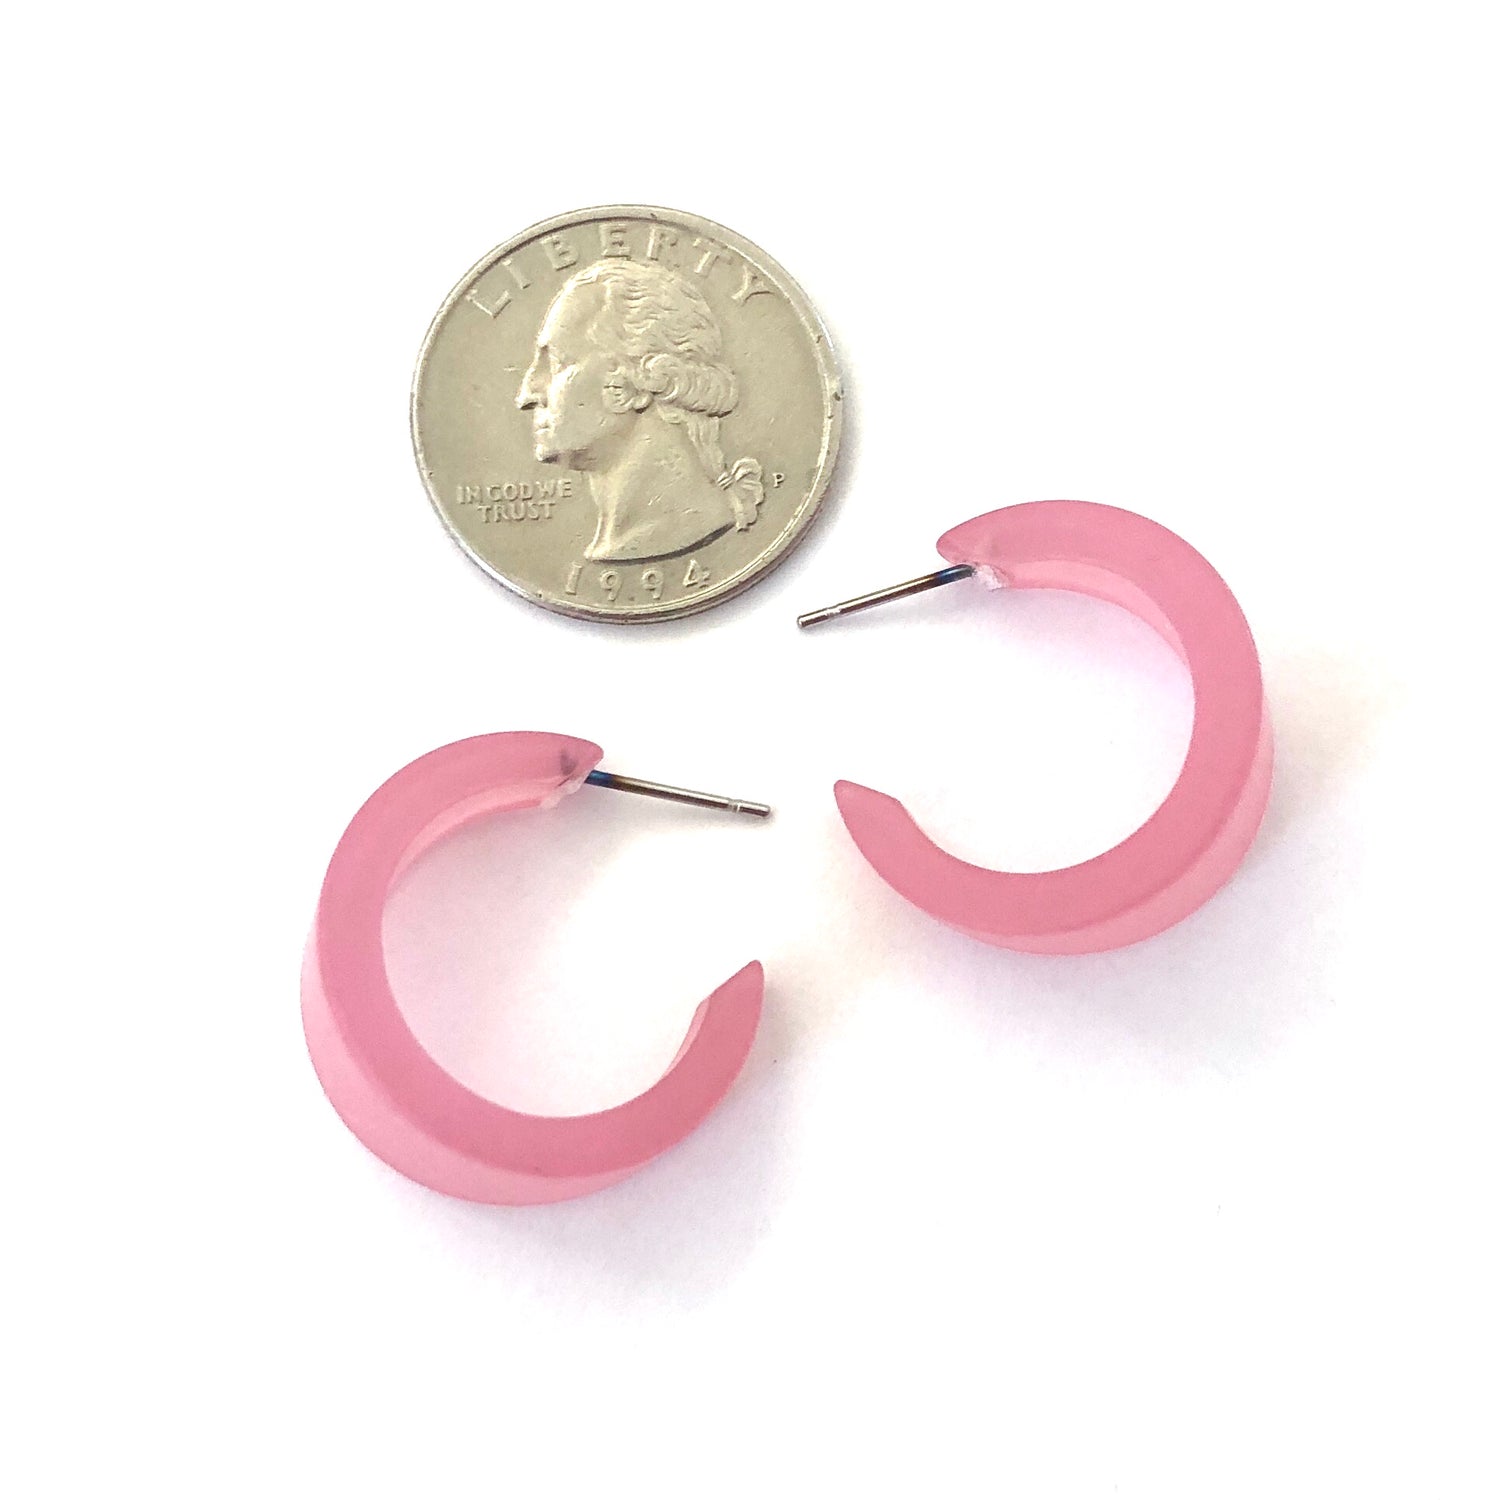 Petal Pink Frosted Small Marilyn Hoop Earrings